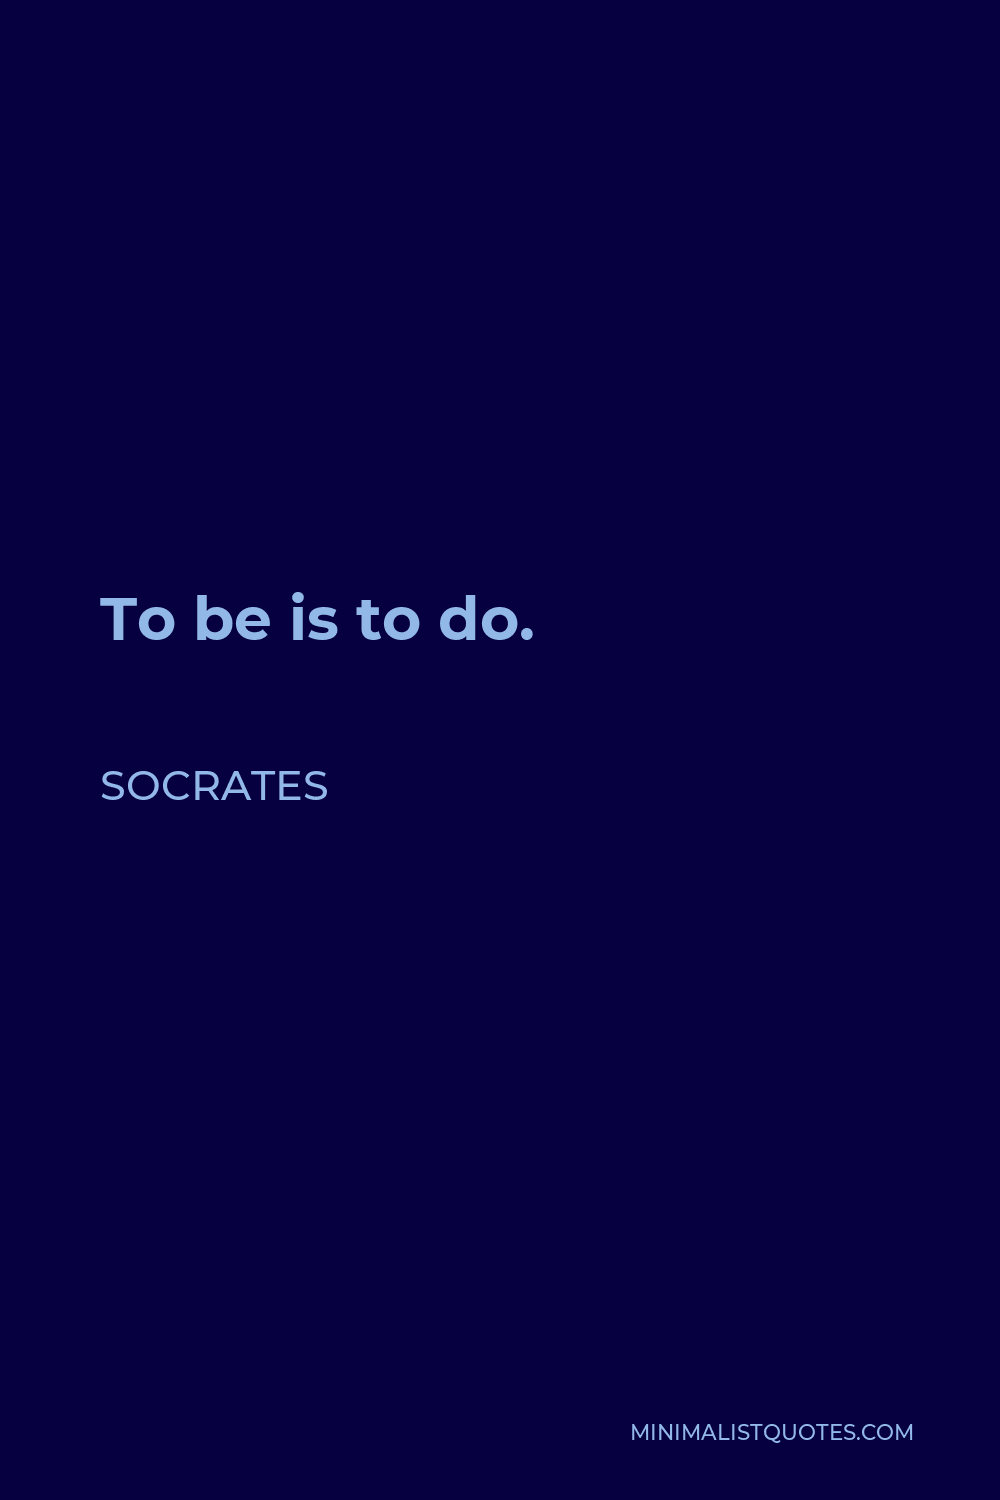 Socrates Quotes Wallpapers QuotesGram